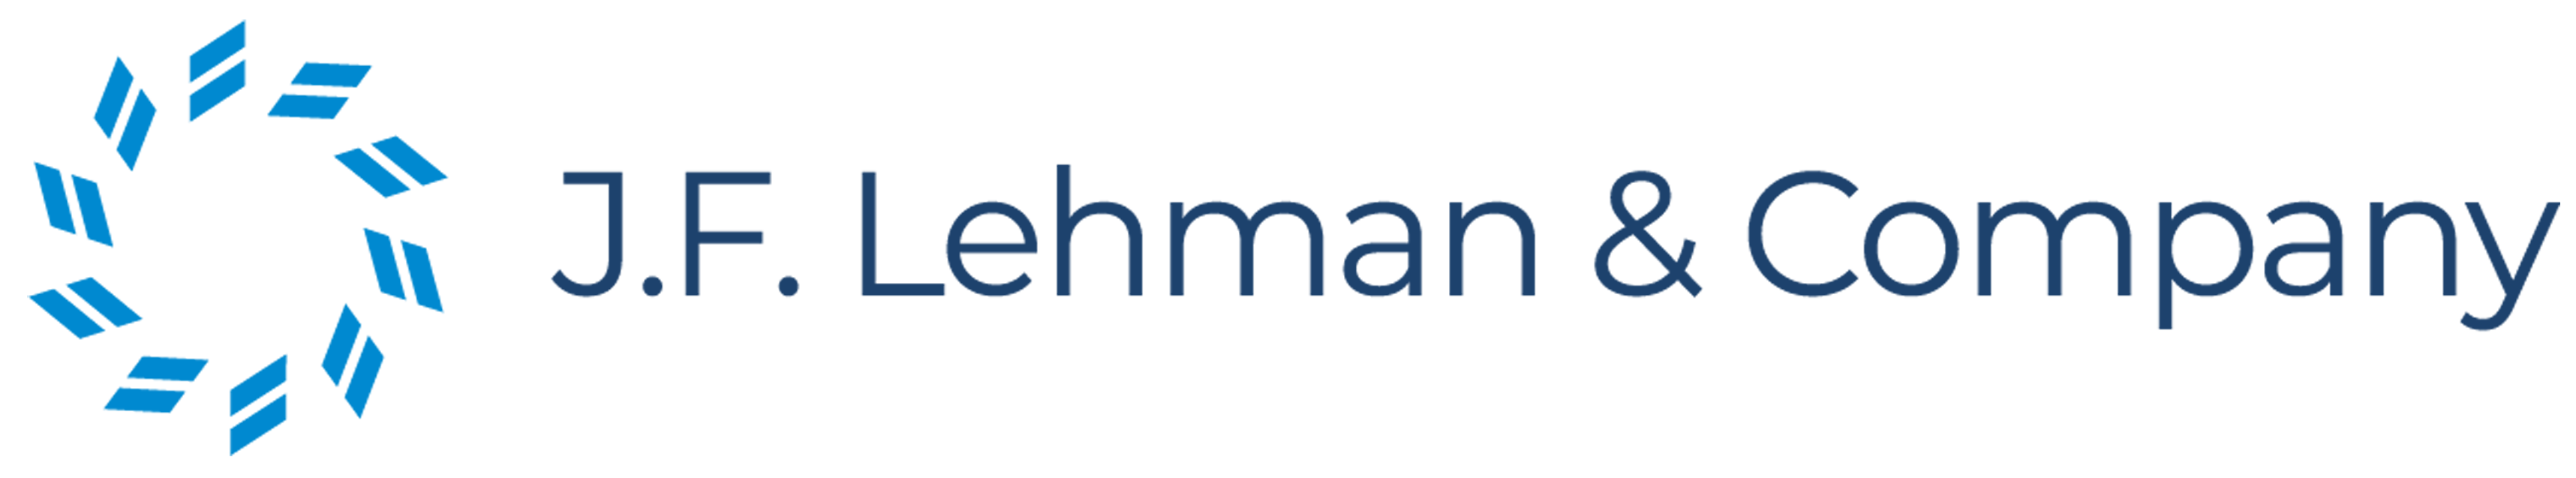 J.F. Lehman & Company Welcomes Newest Team Members, October 26 2020